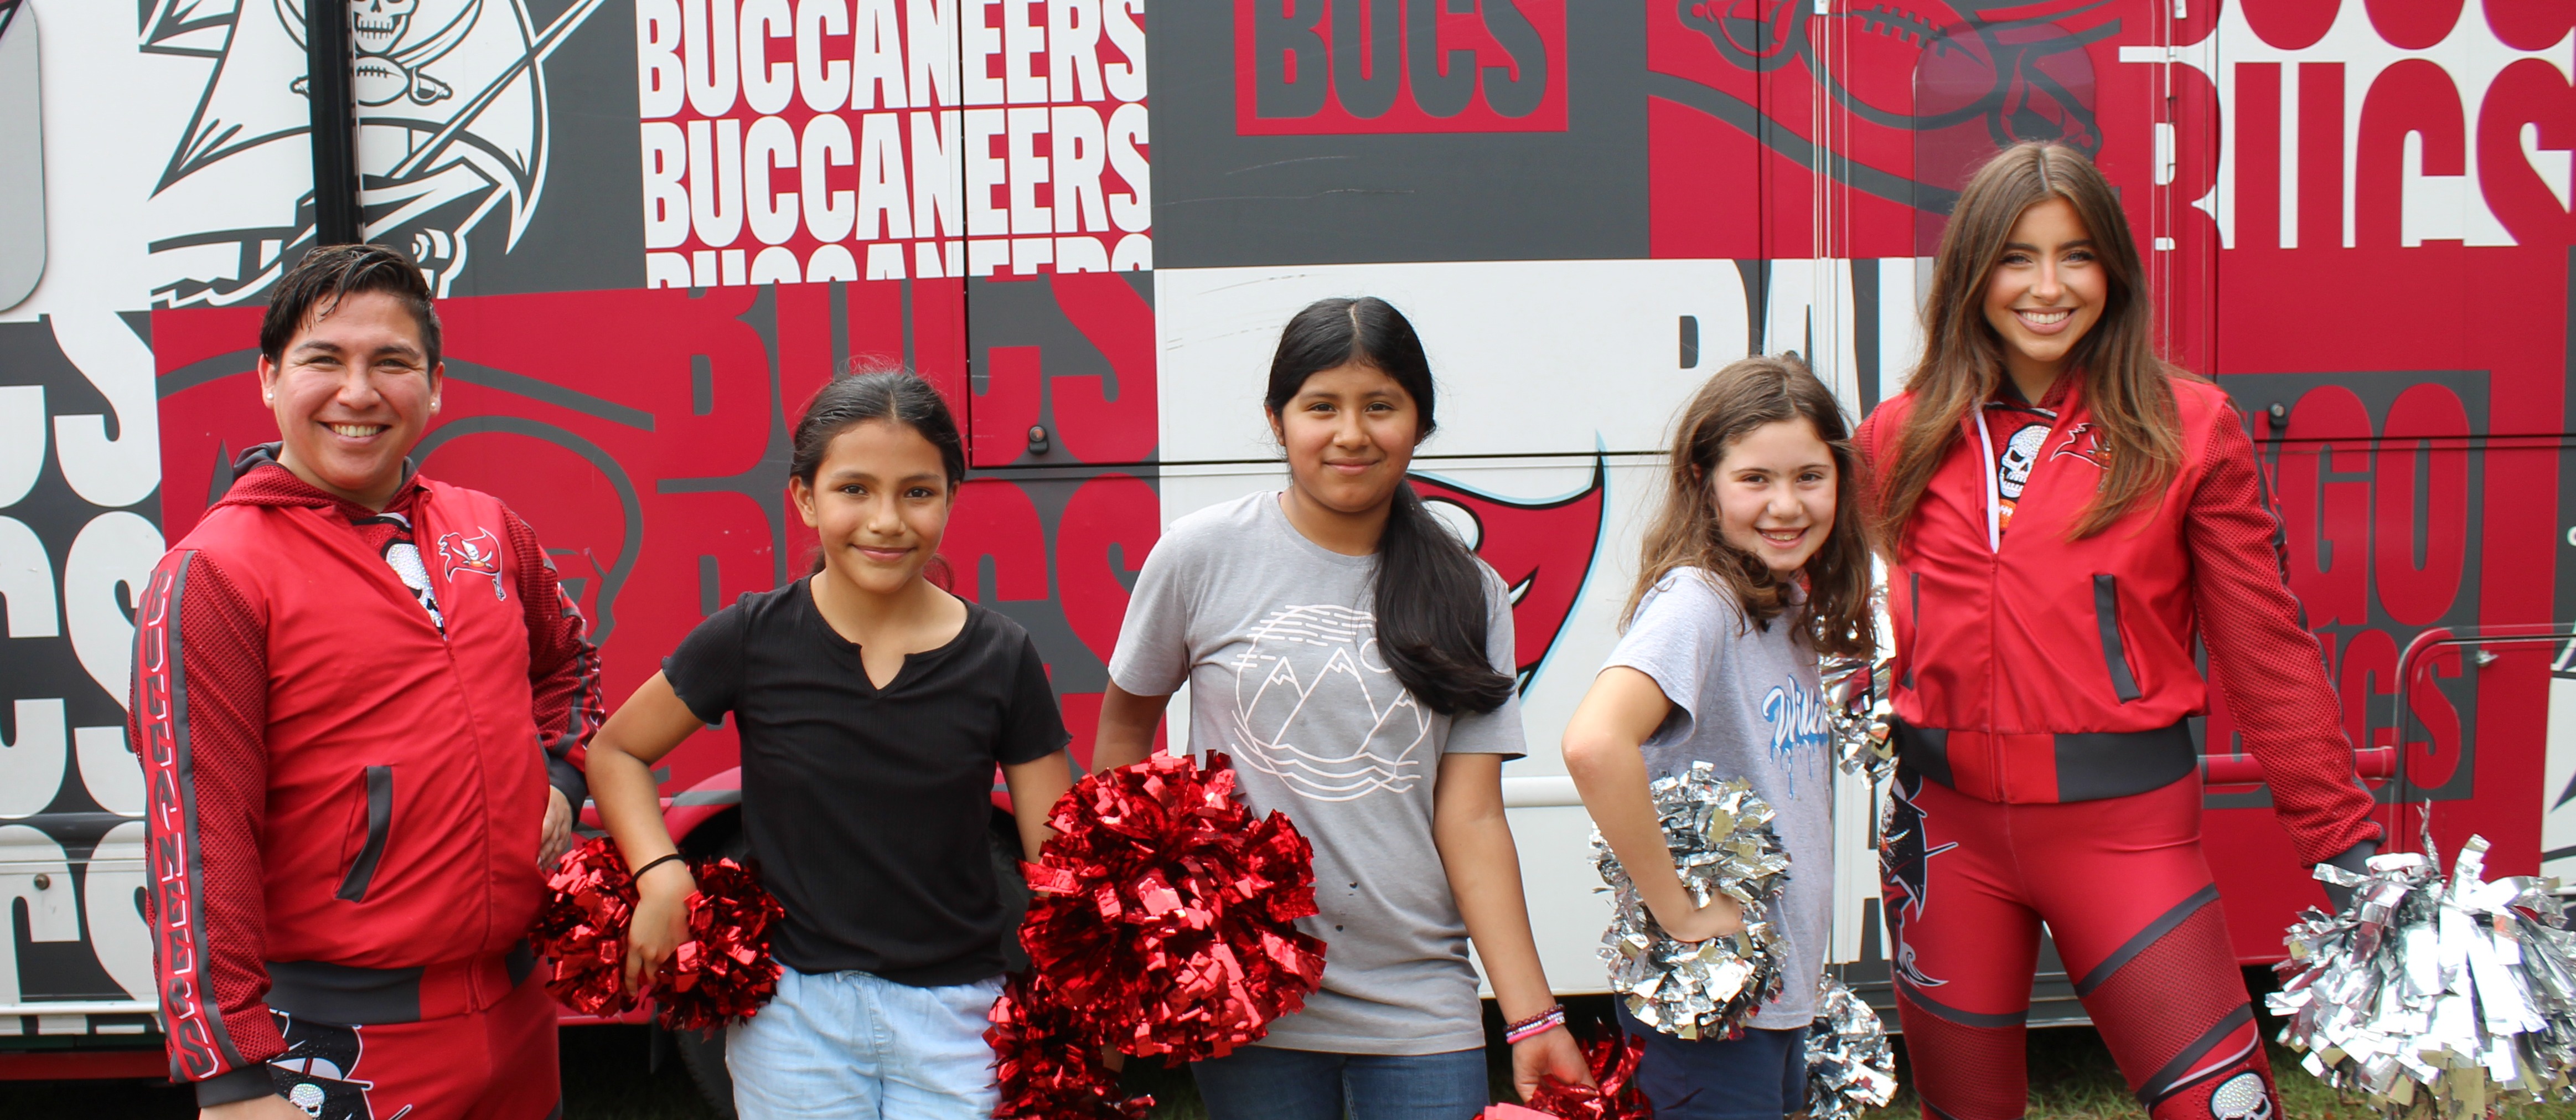 students with buccaneers cheerleaders